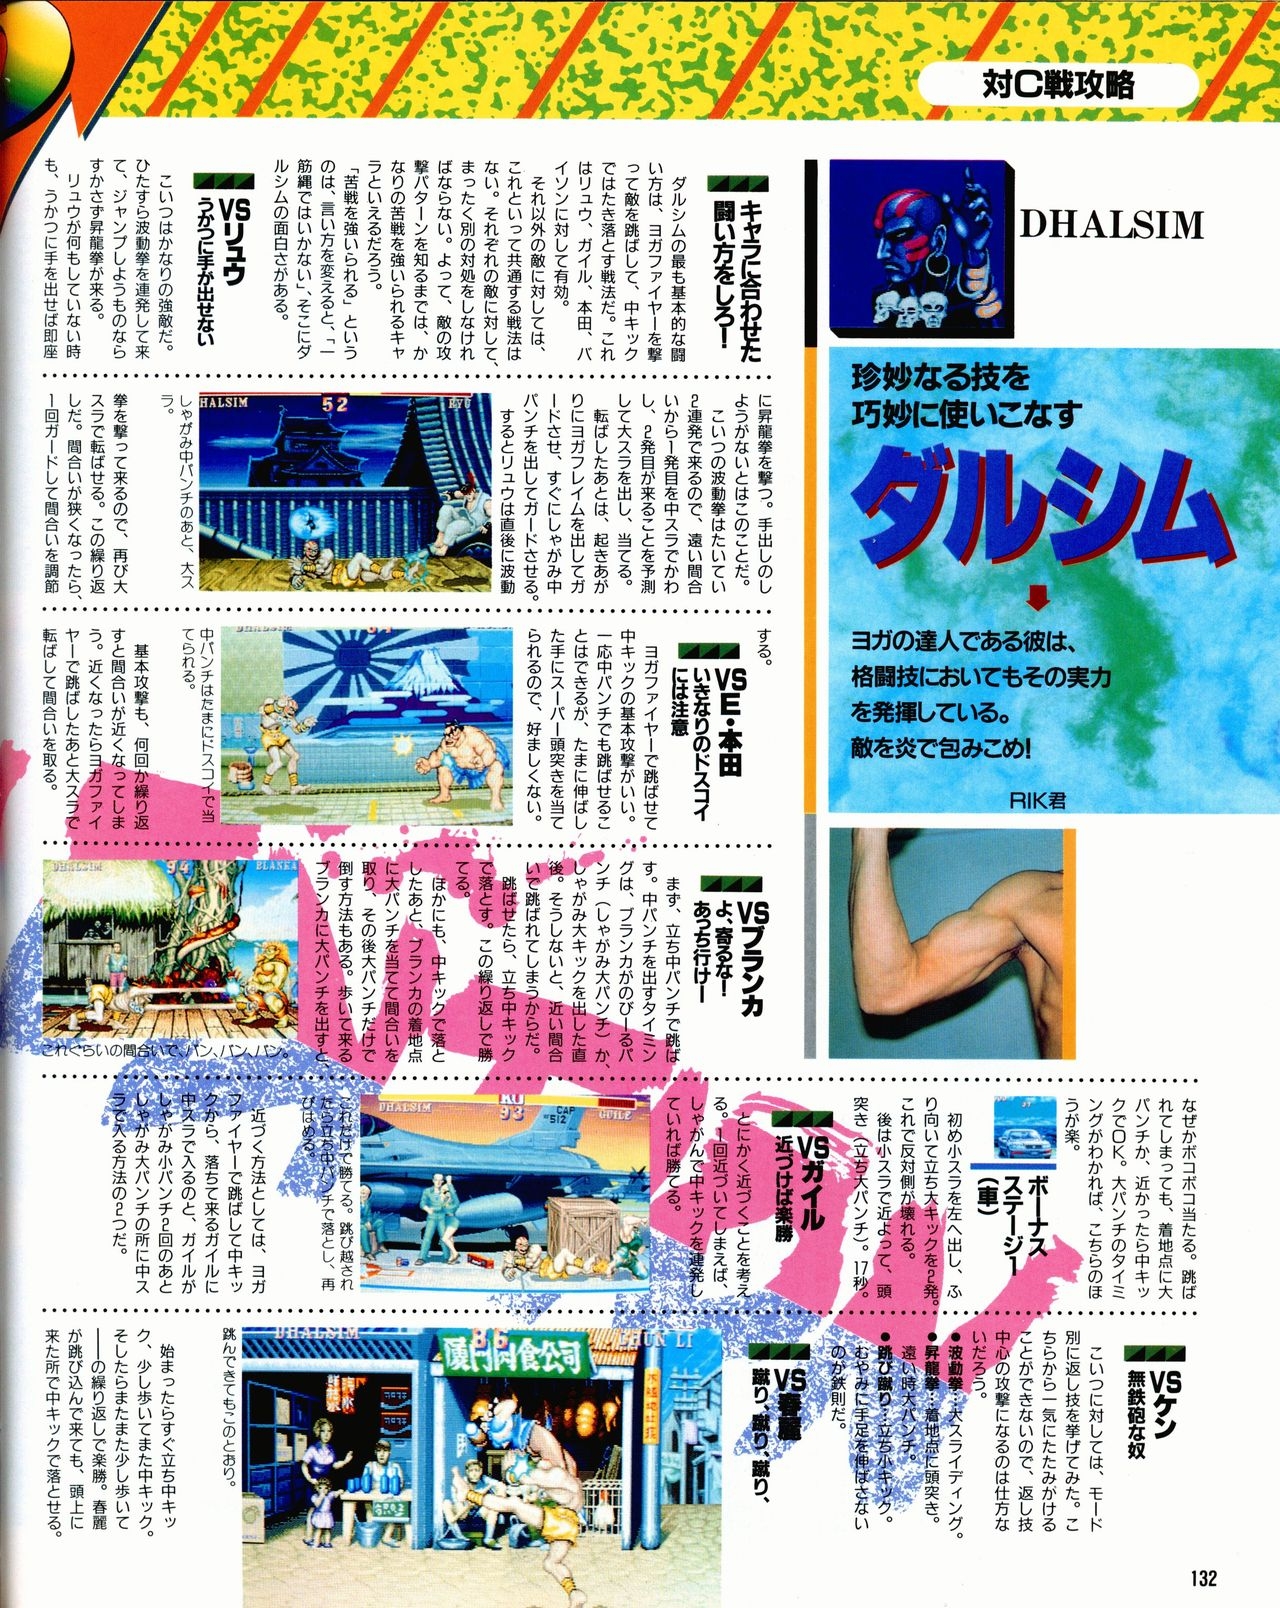 Street Fighter II Dash - Gamest special issue 77 133